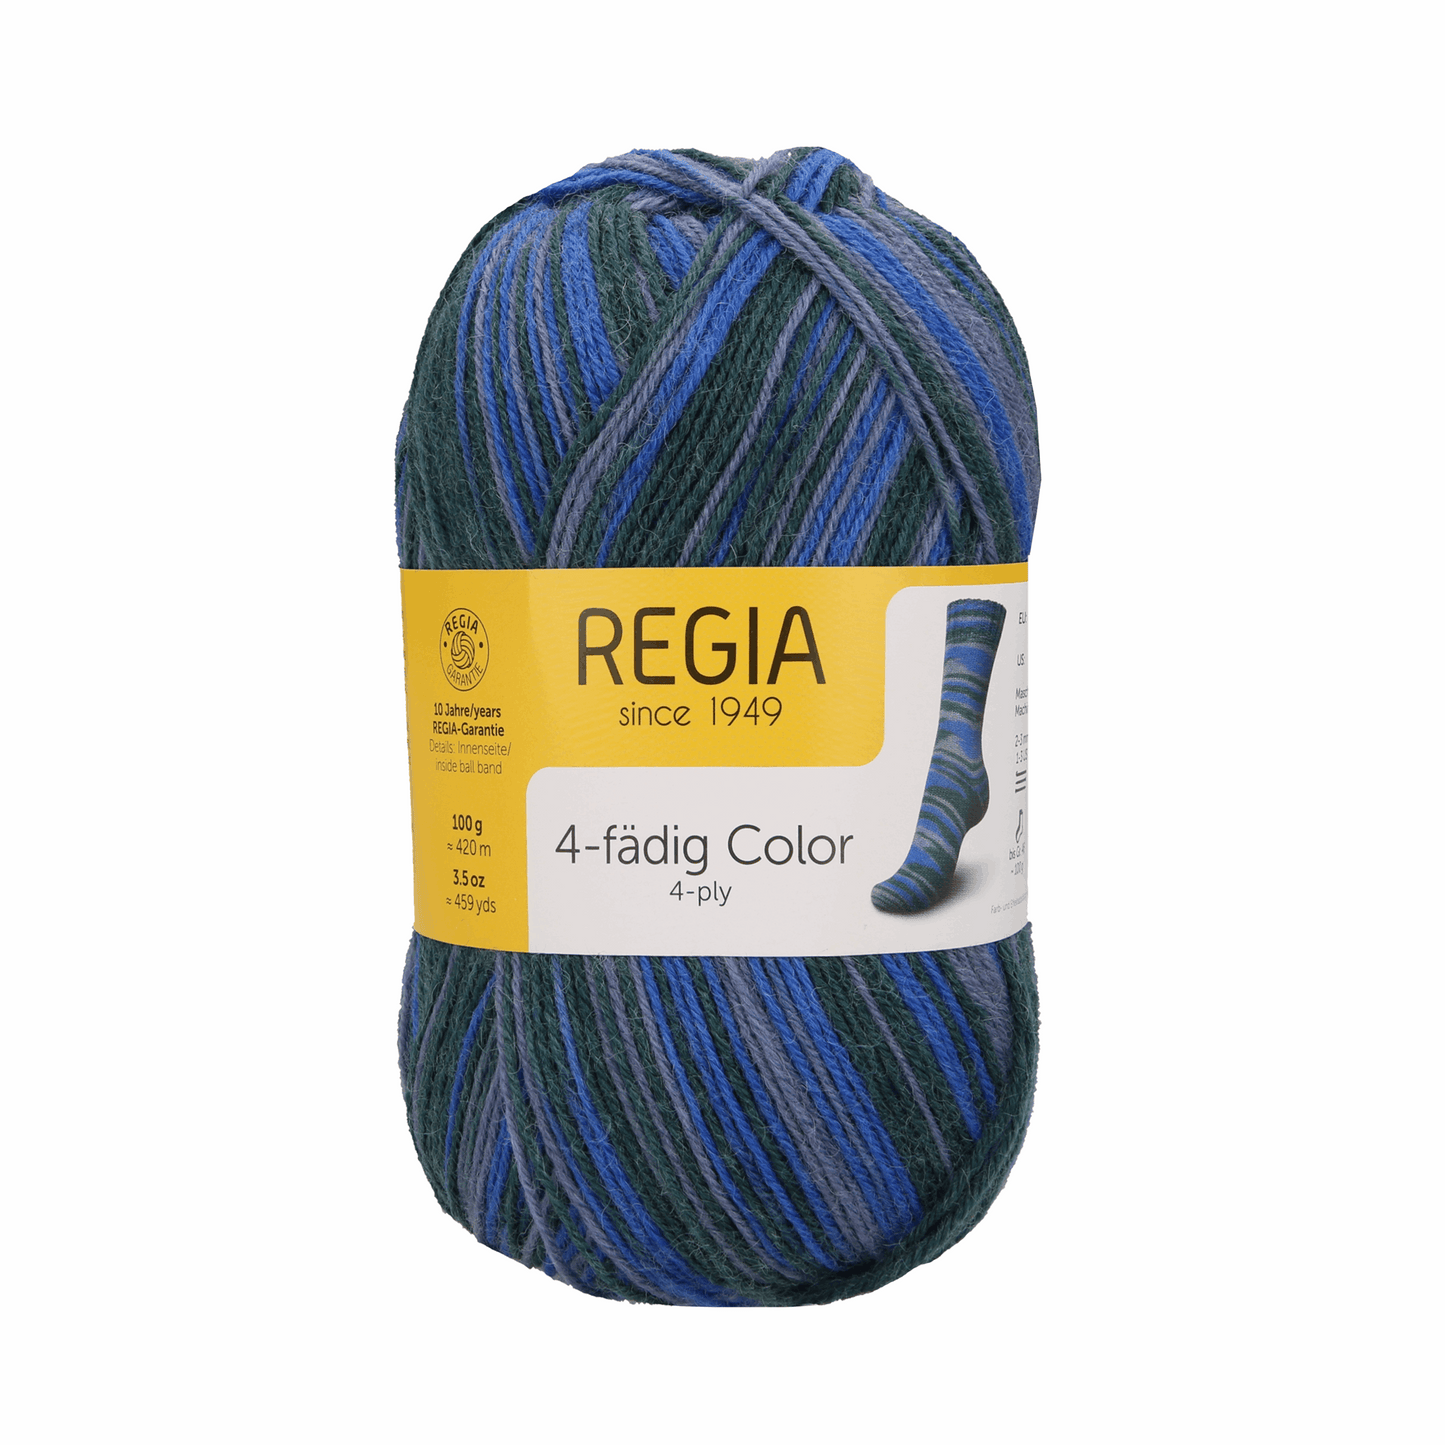 Regia 4fädig 100g, 90269, Farbe 2595, blue-green